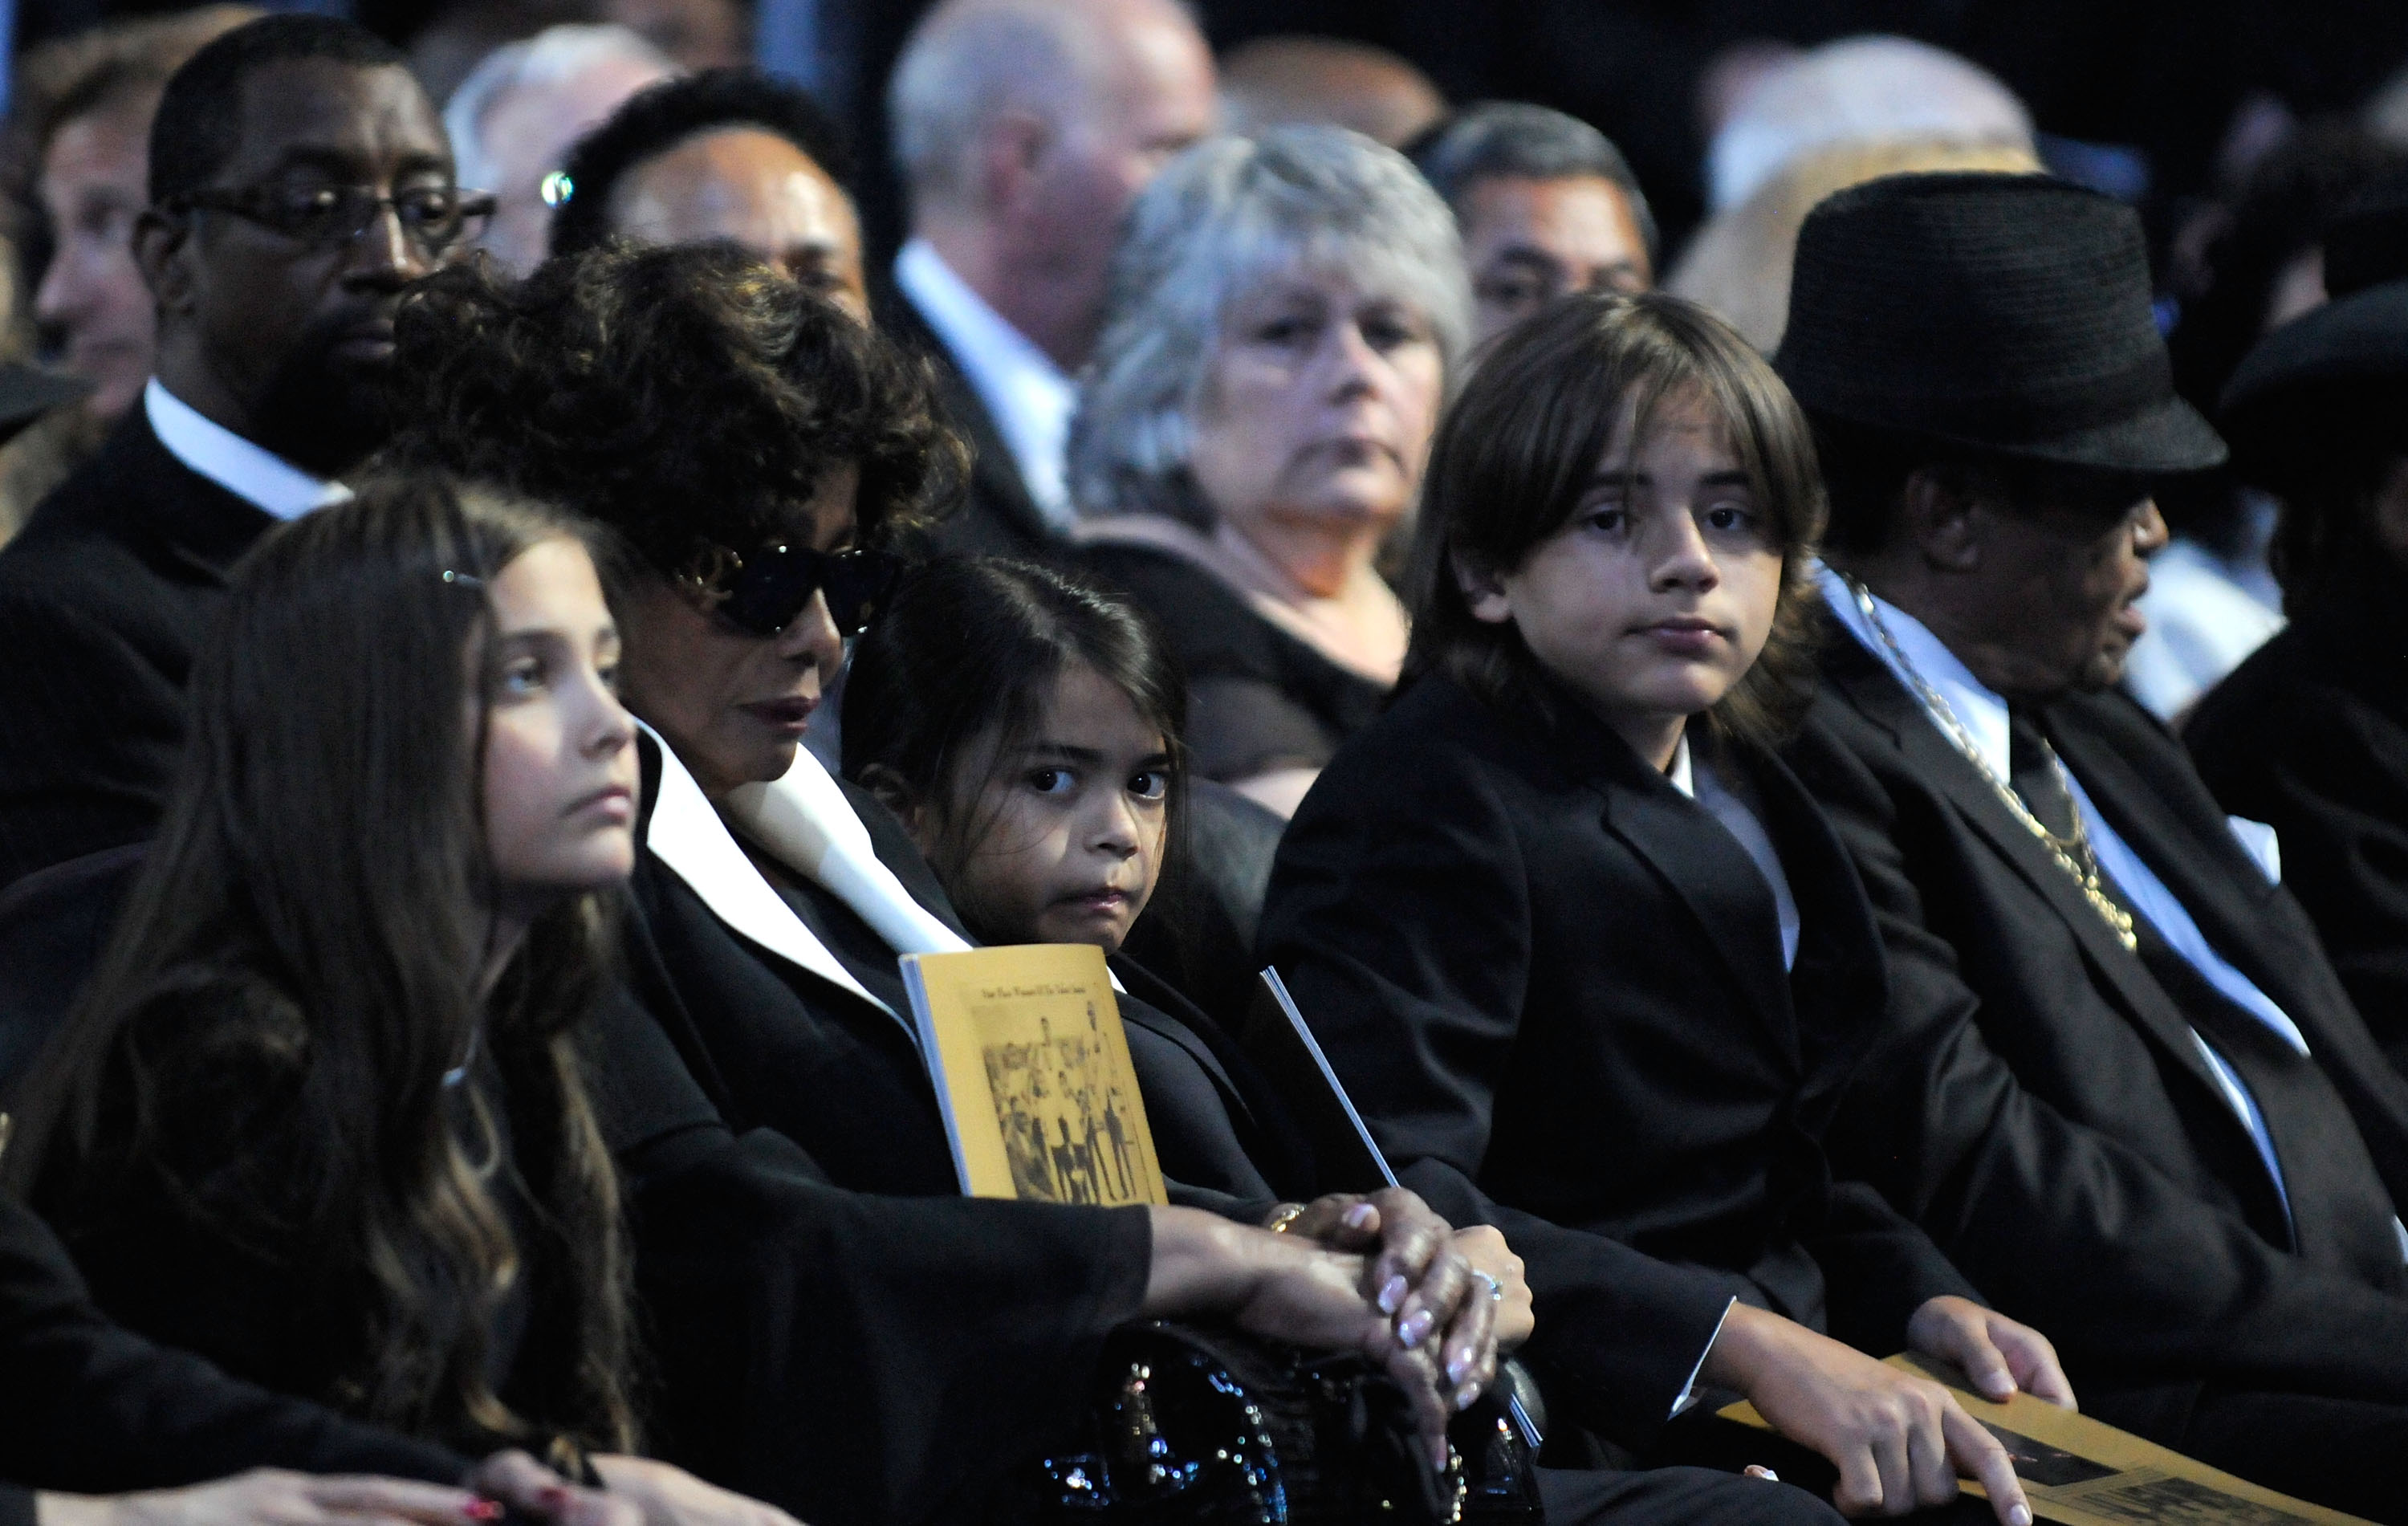 Paris Jackson, Katherine Jackson, Bigi Jackson, Prince Michael Jackson, and Joe Jackson at Michael Jackson's memorial service in 2009 | Source: Getty Images